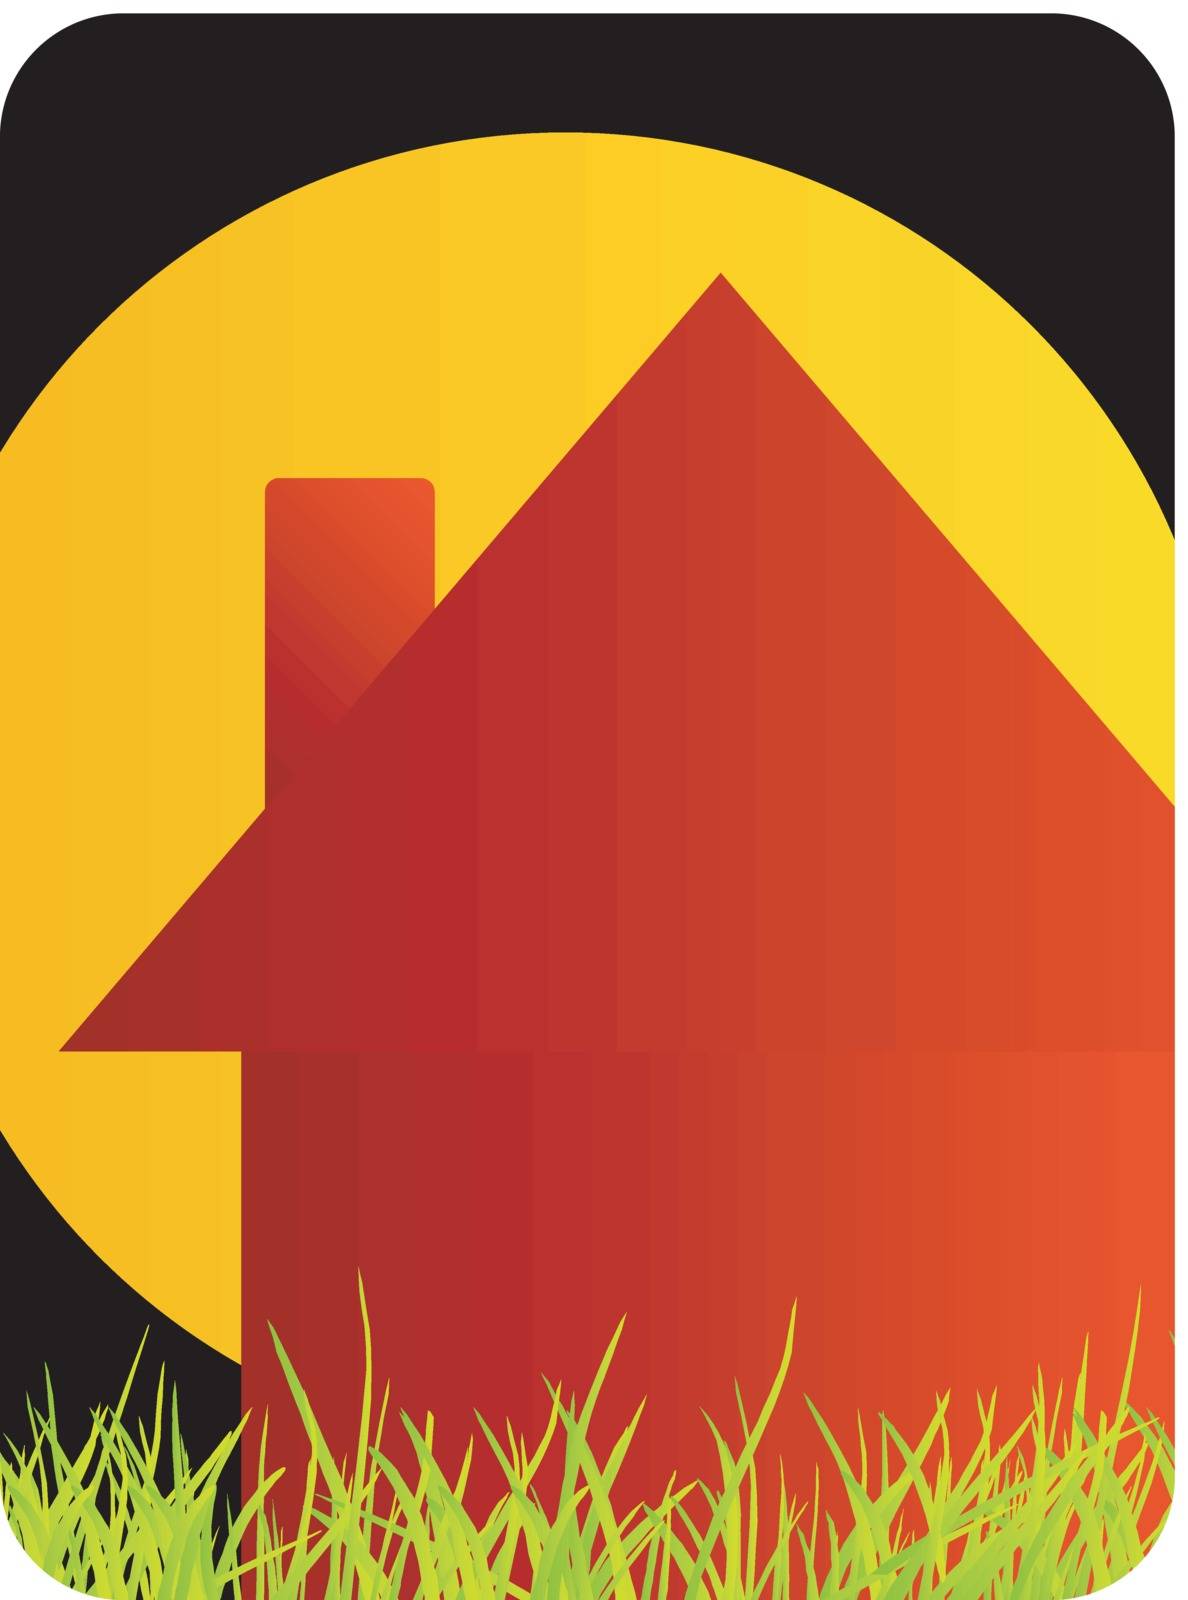 Logo for home renovation